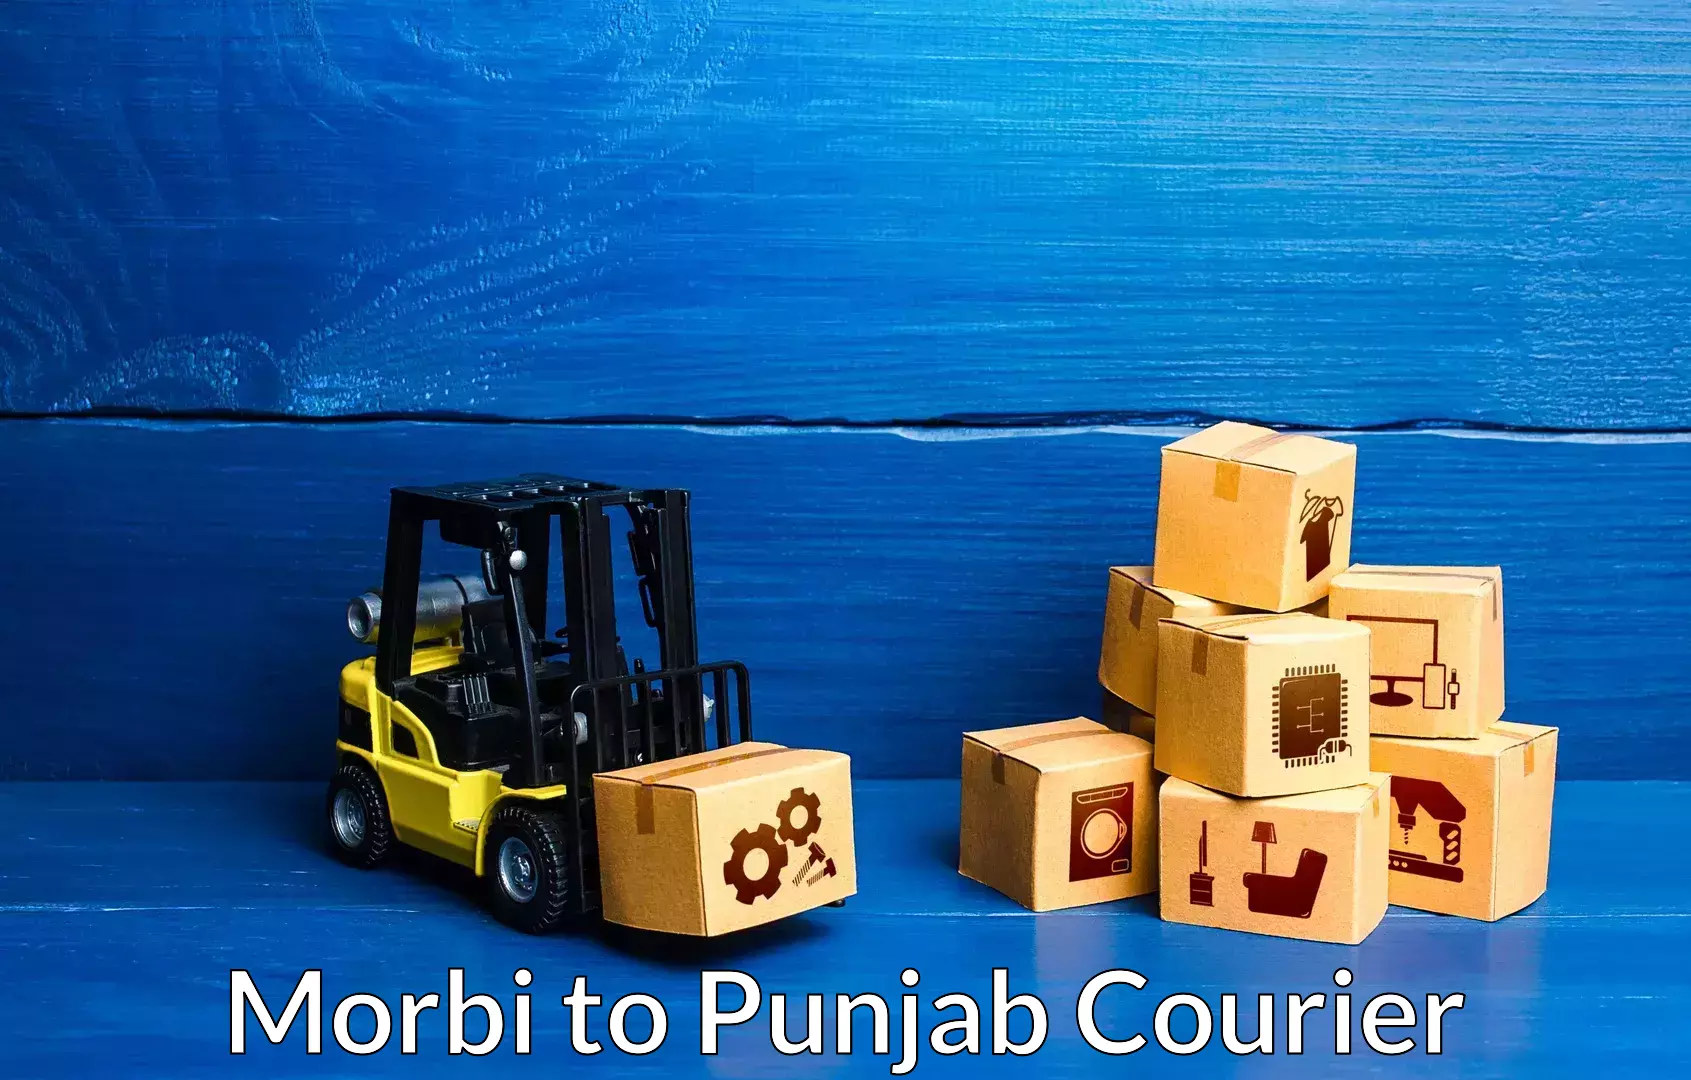 Furniture transport specialists Morbi to Punjab